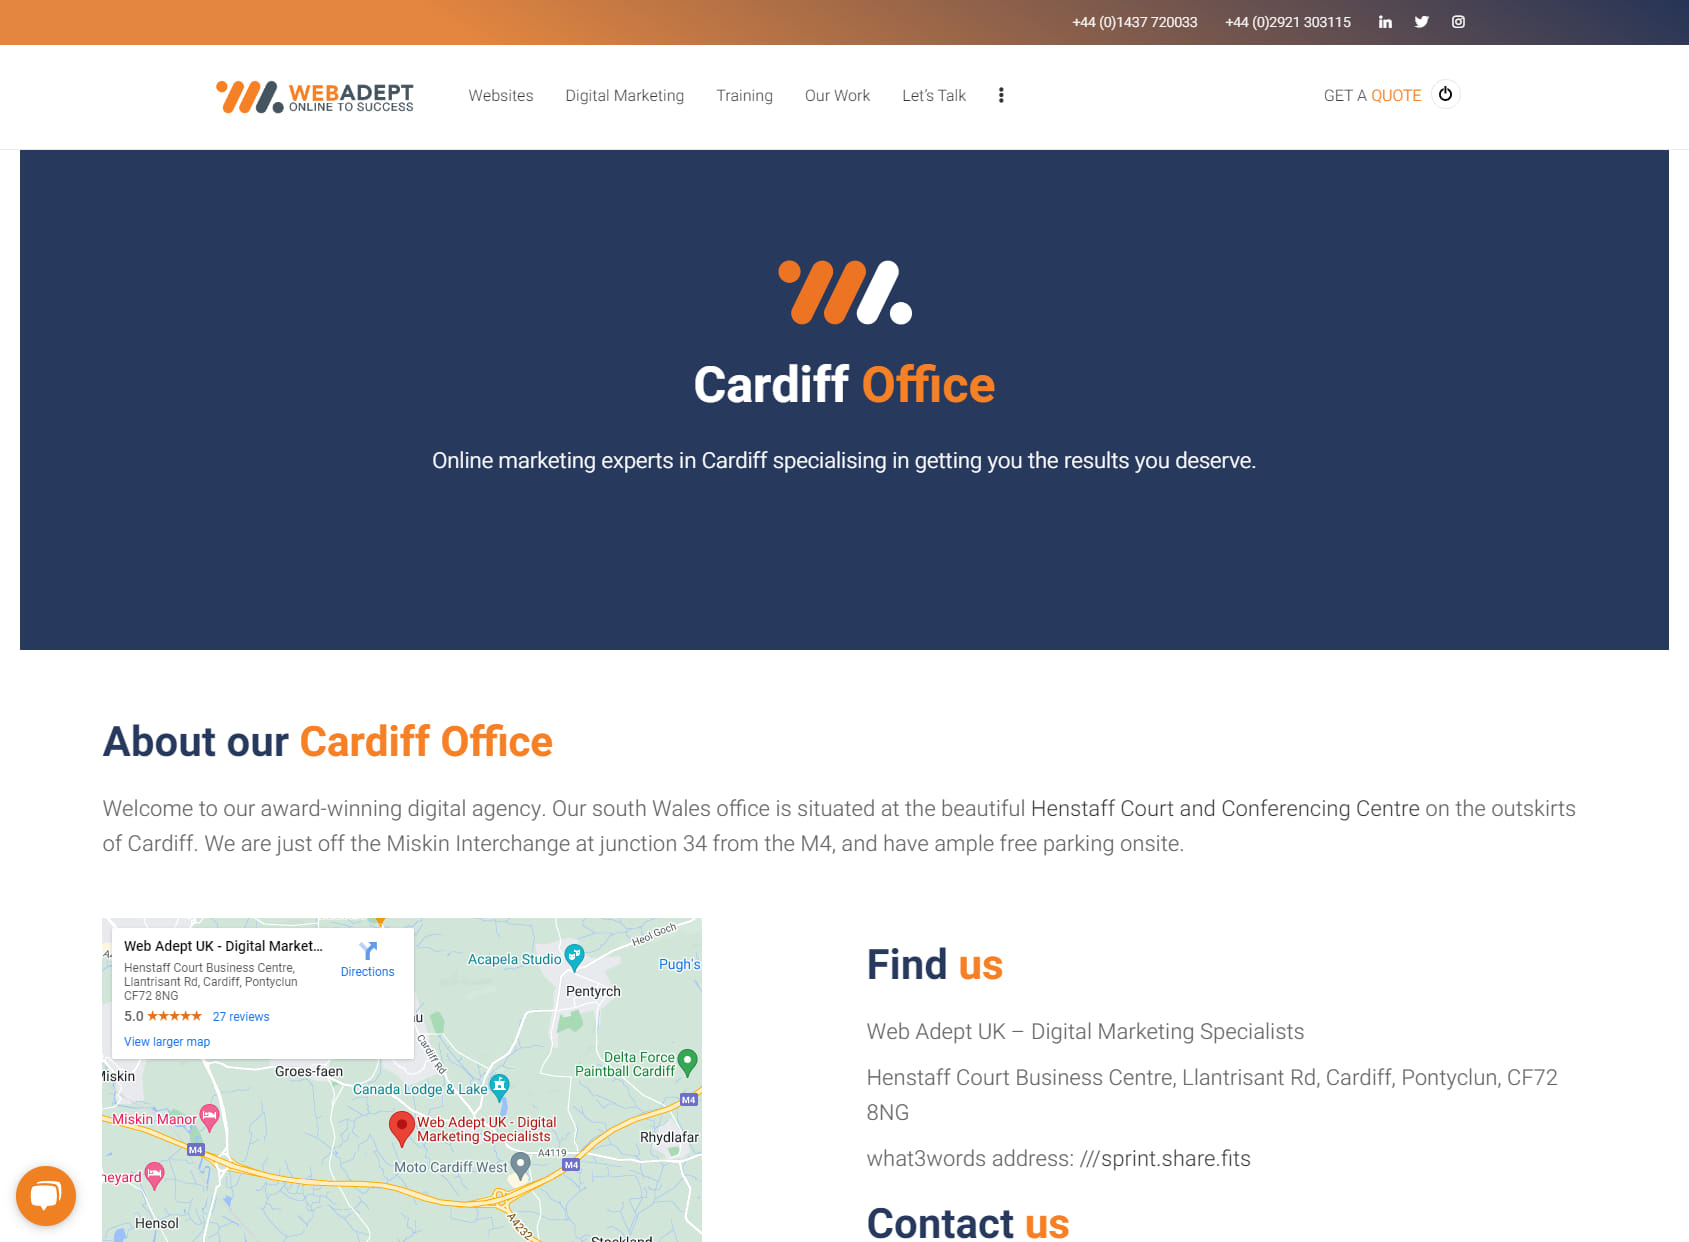 Web Adept UK - Digital Marketing Specialists